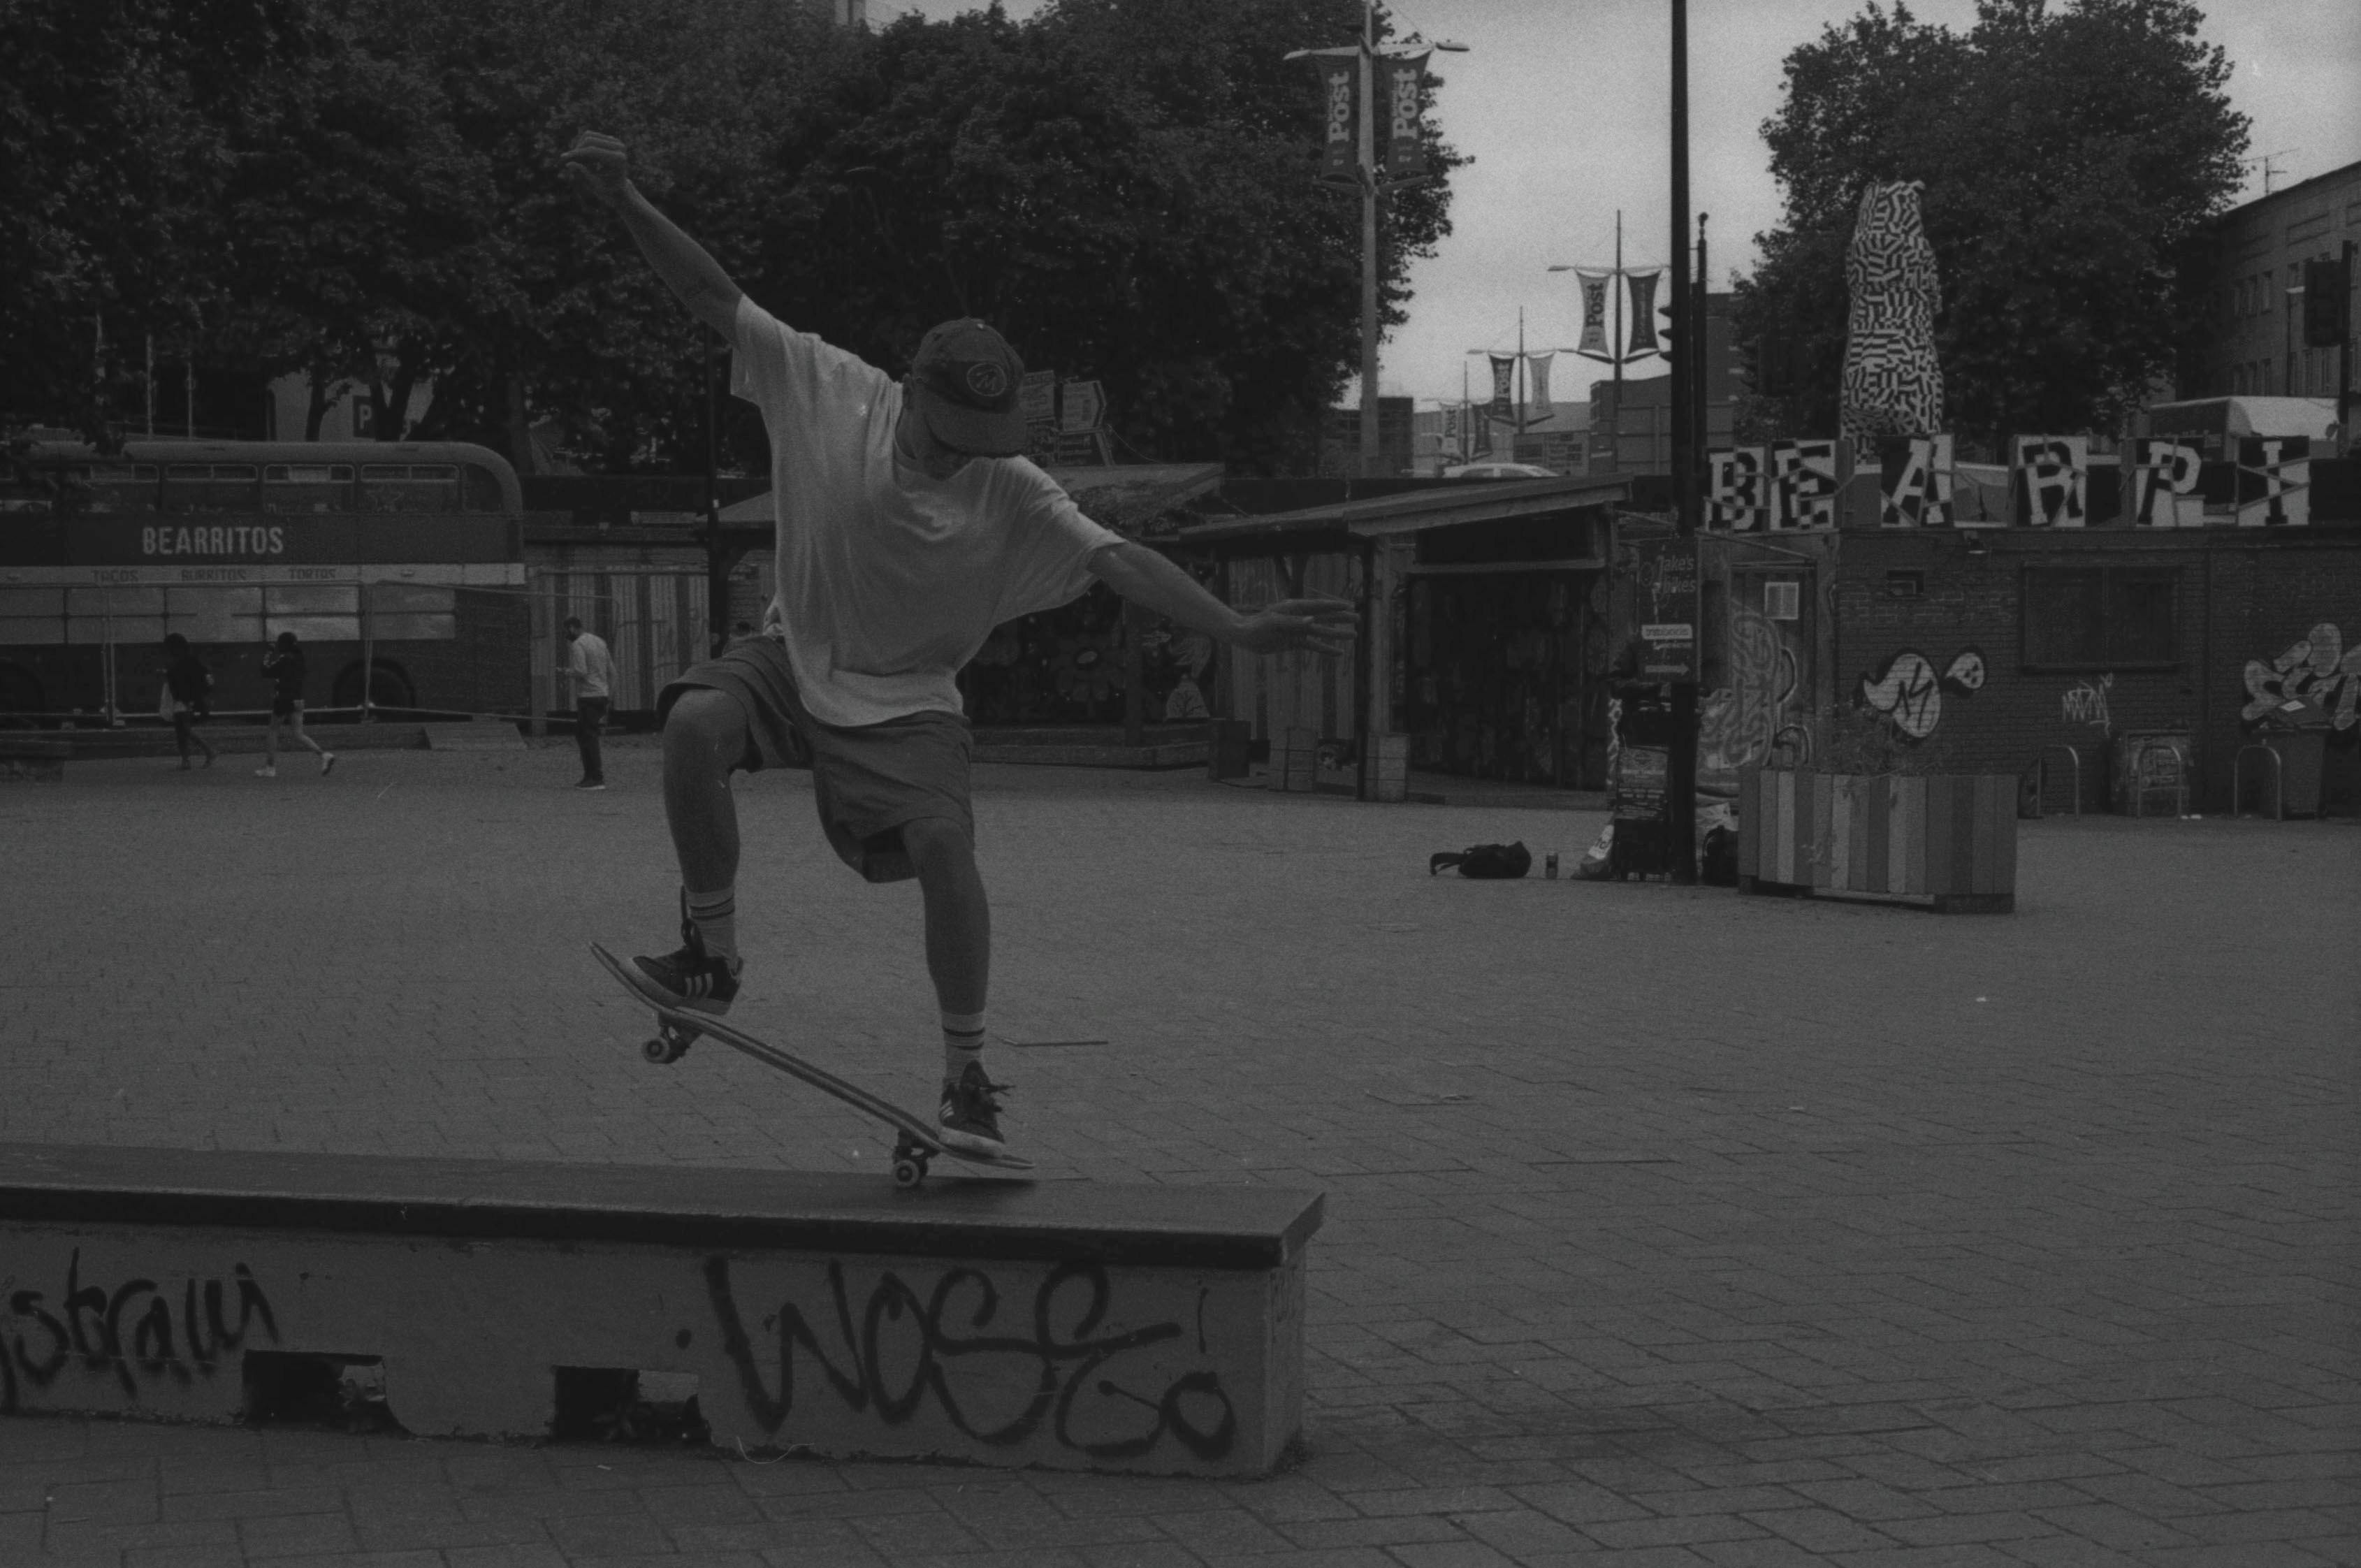 Free stock photo of skater, street photography, urban area